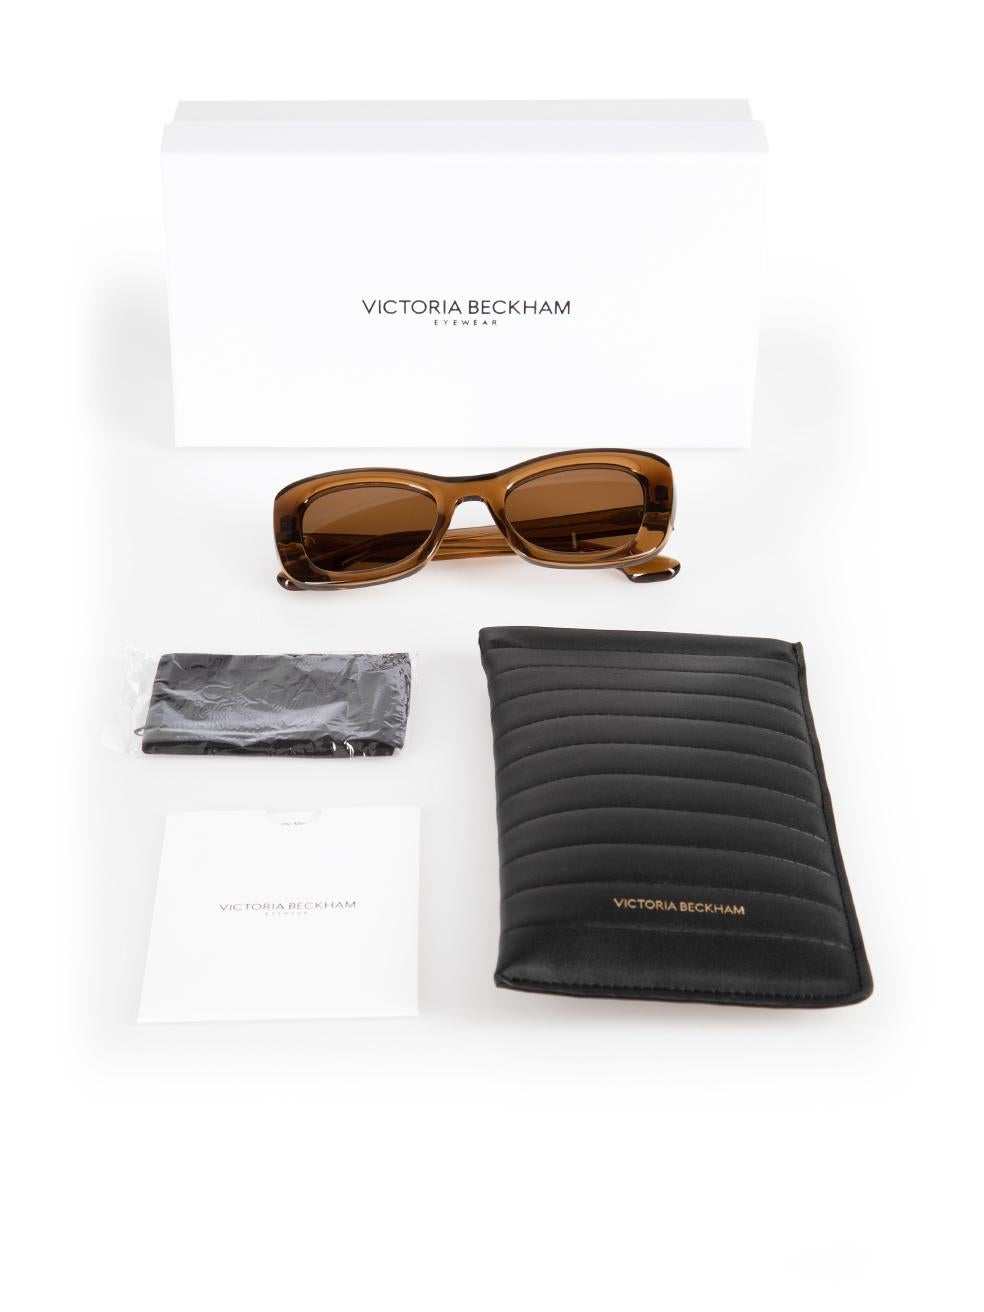 Victoria Beckham Caramel Butterfly Sunglasses For Sale 4